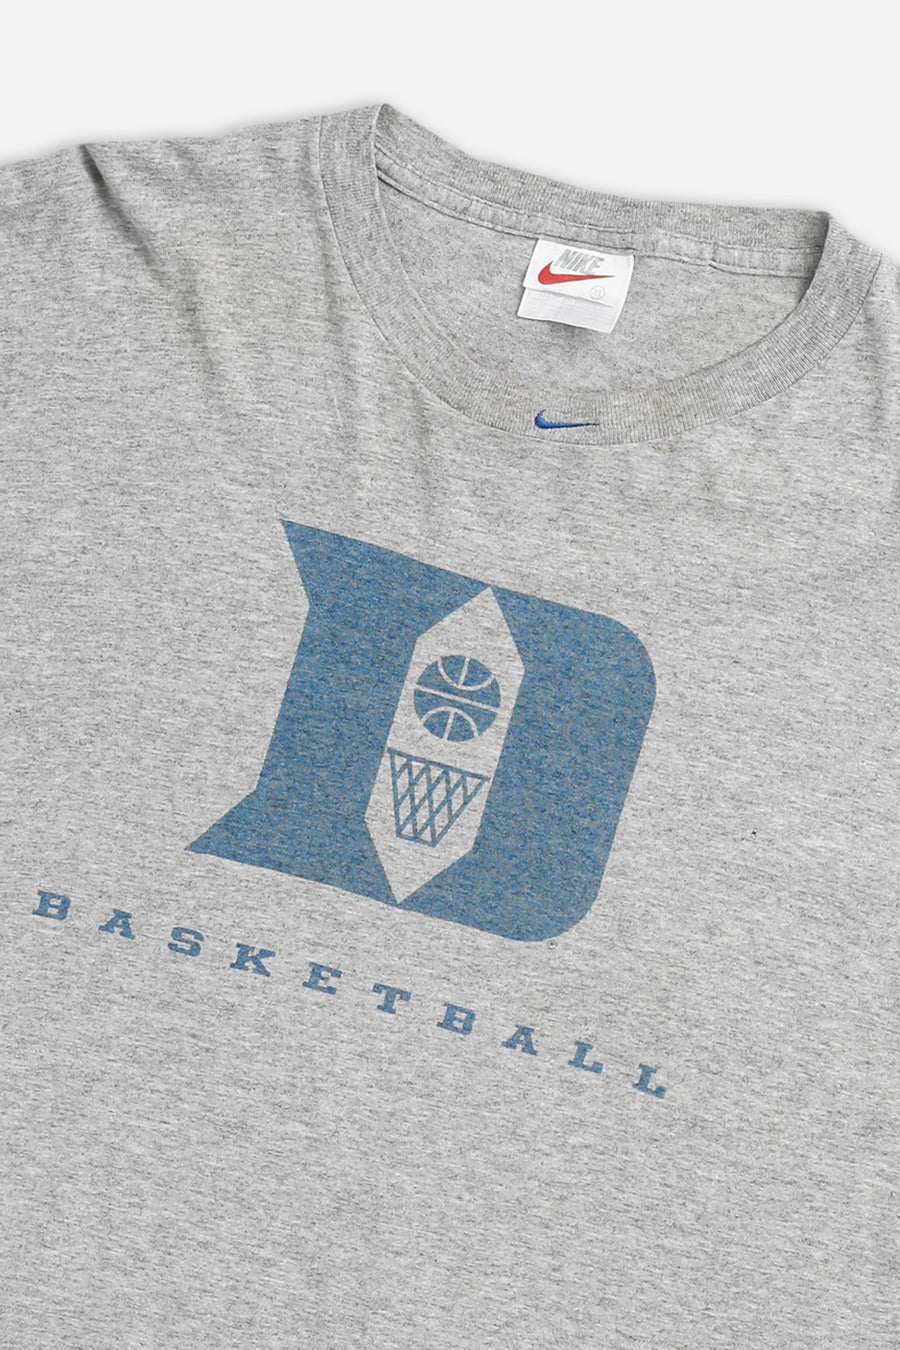 Vintage Nike Duke Basketball Tee - XL